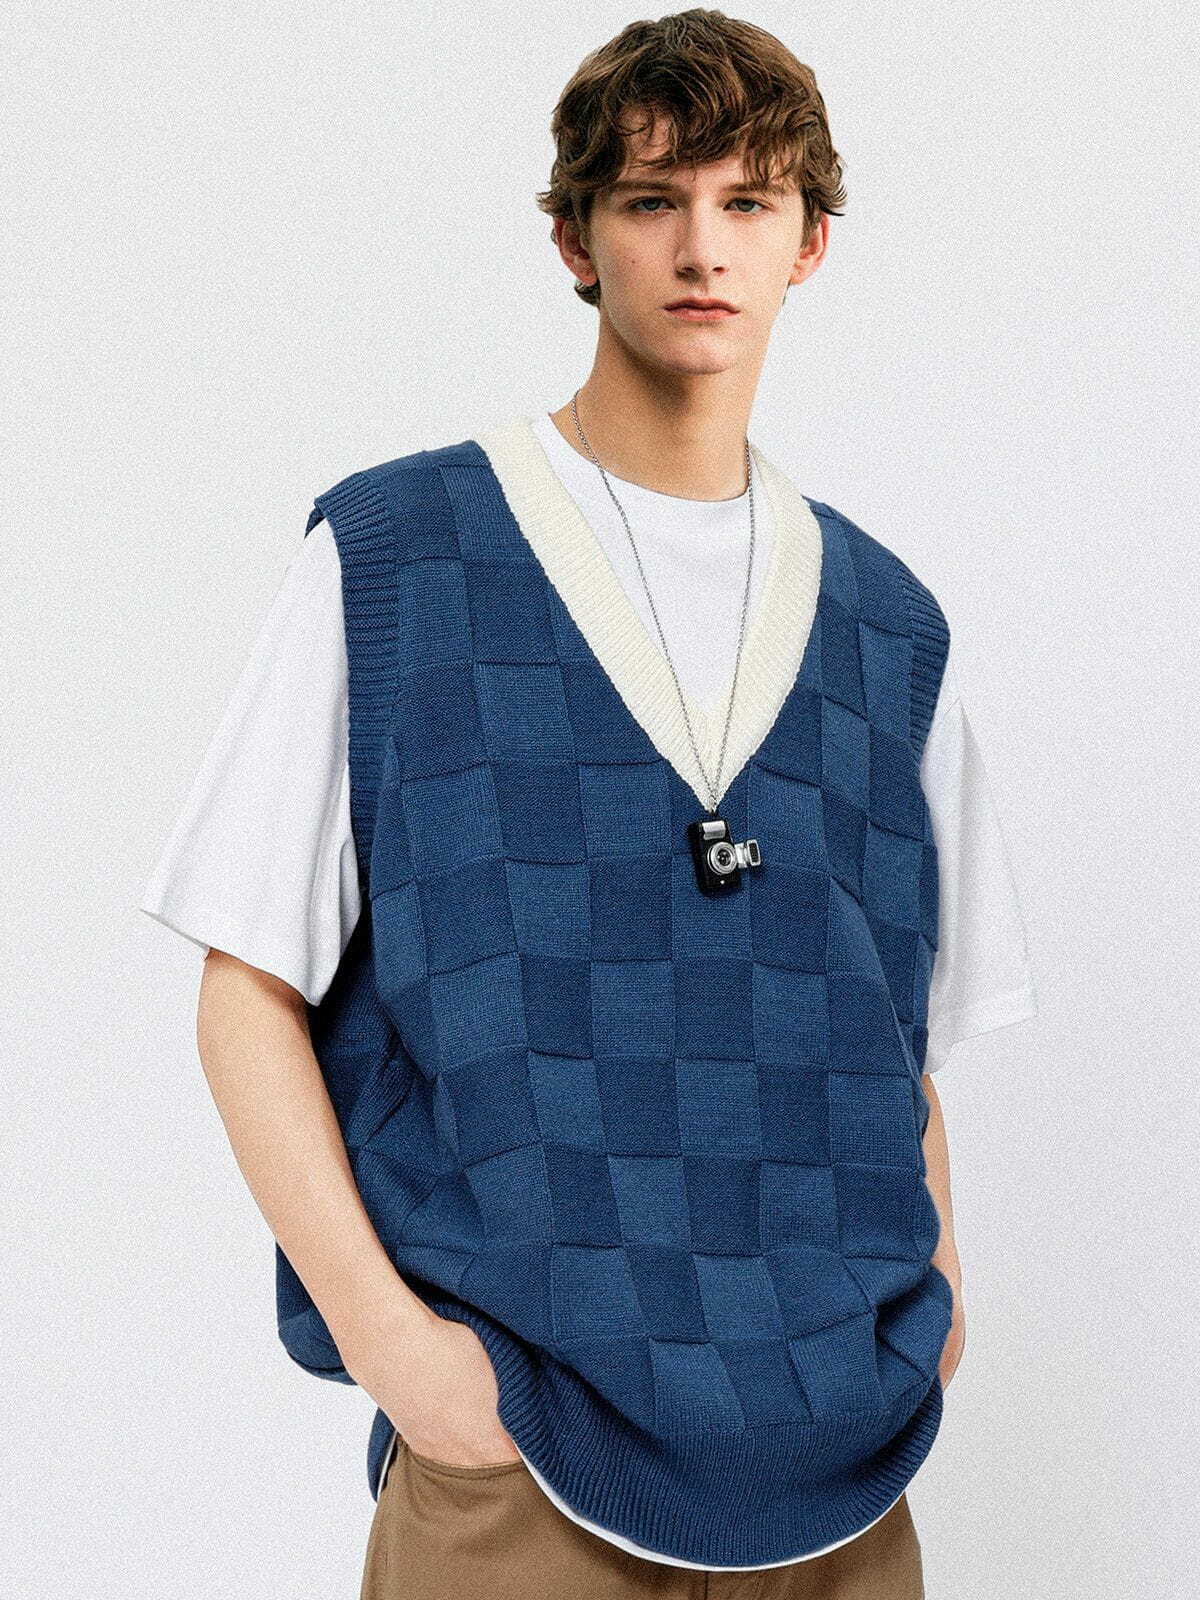 lattice sweater vest retro streetwear essential 4424